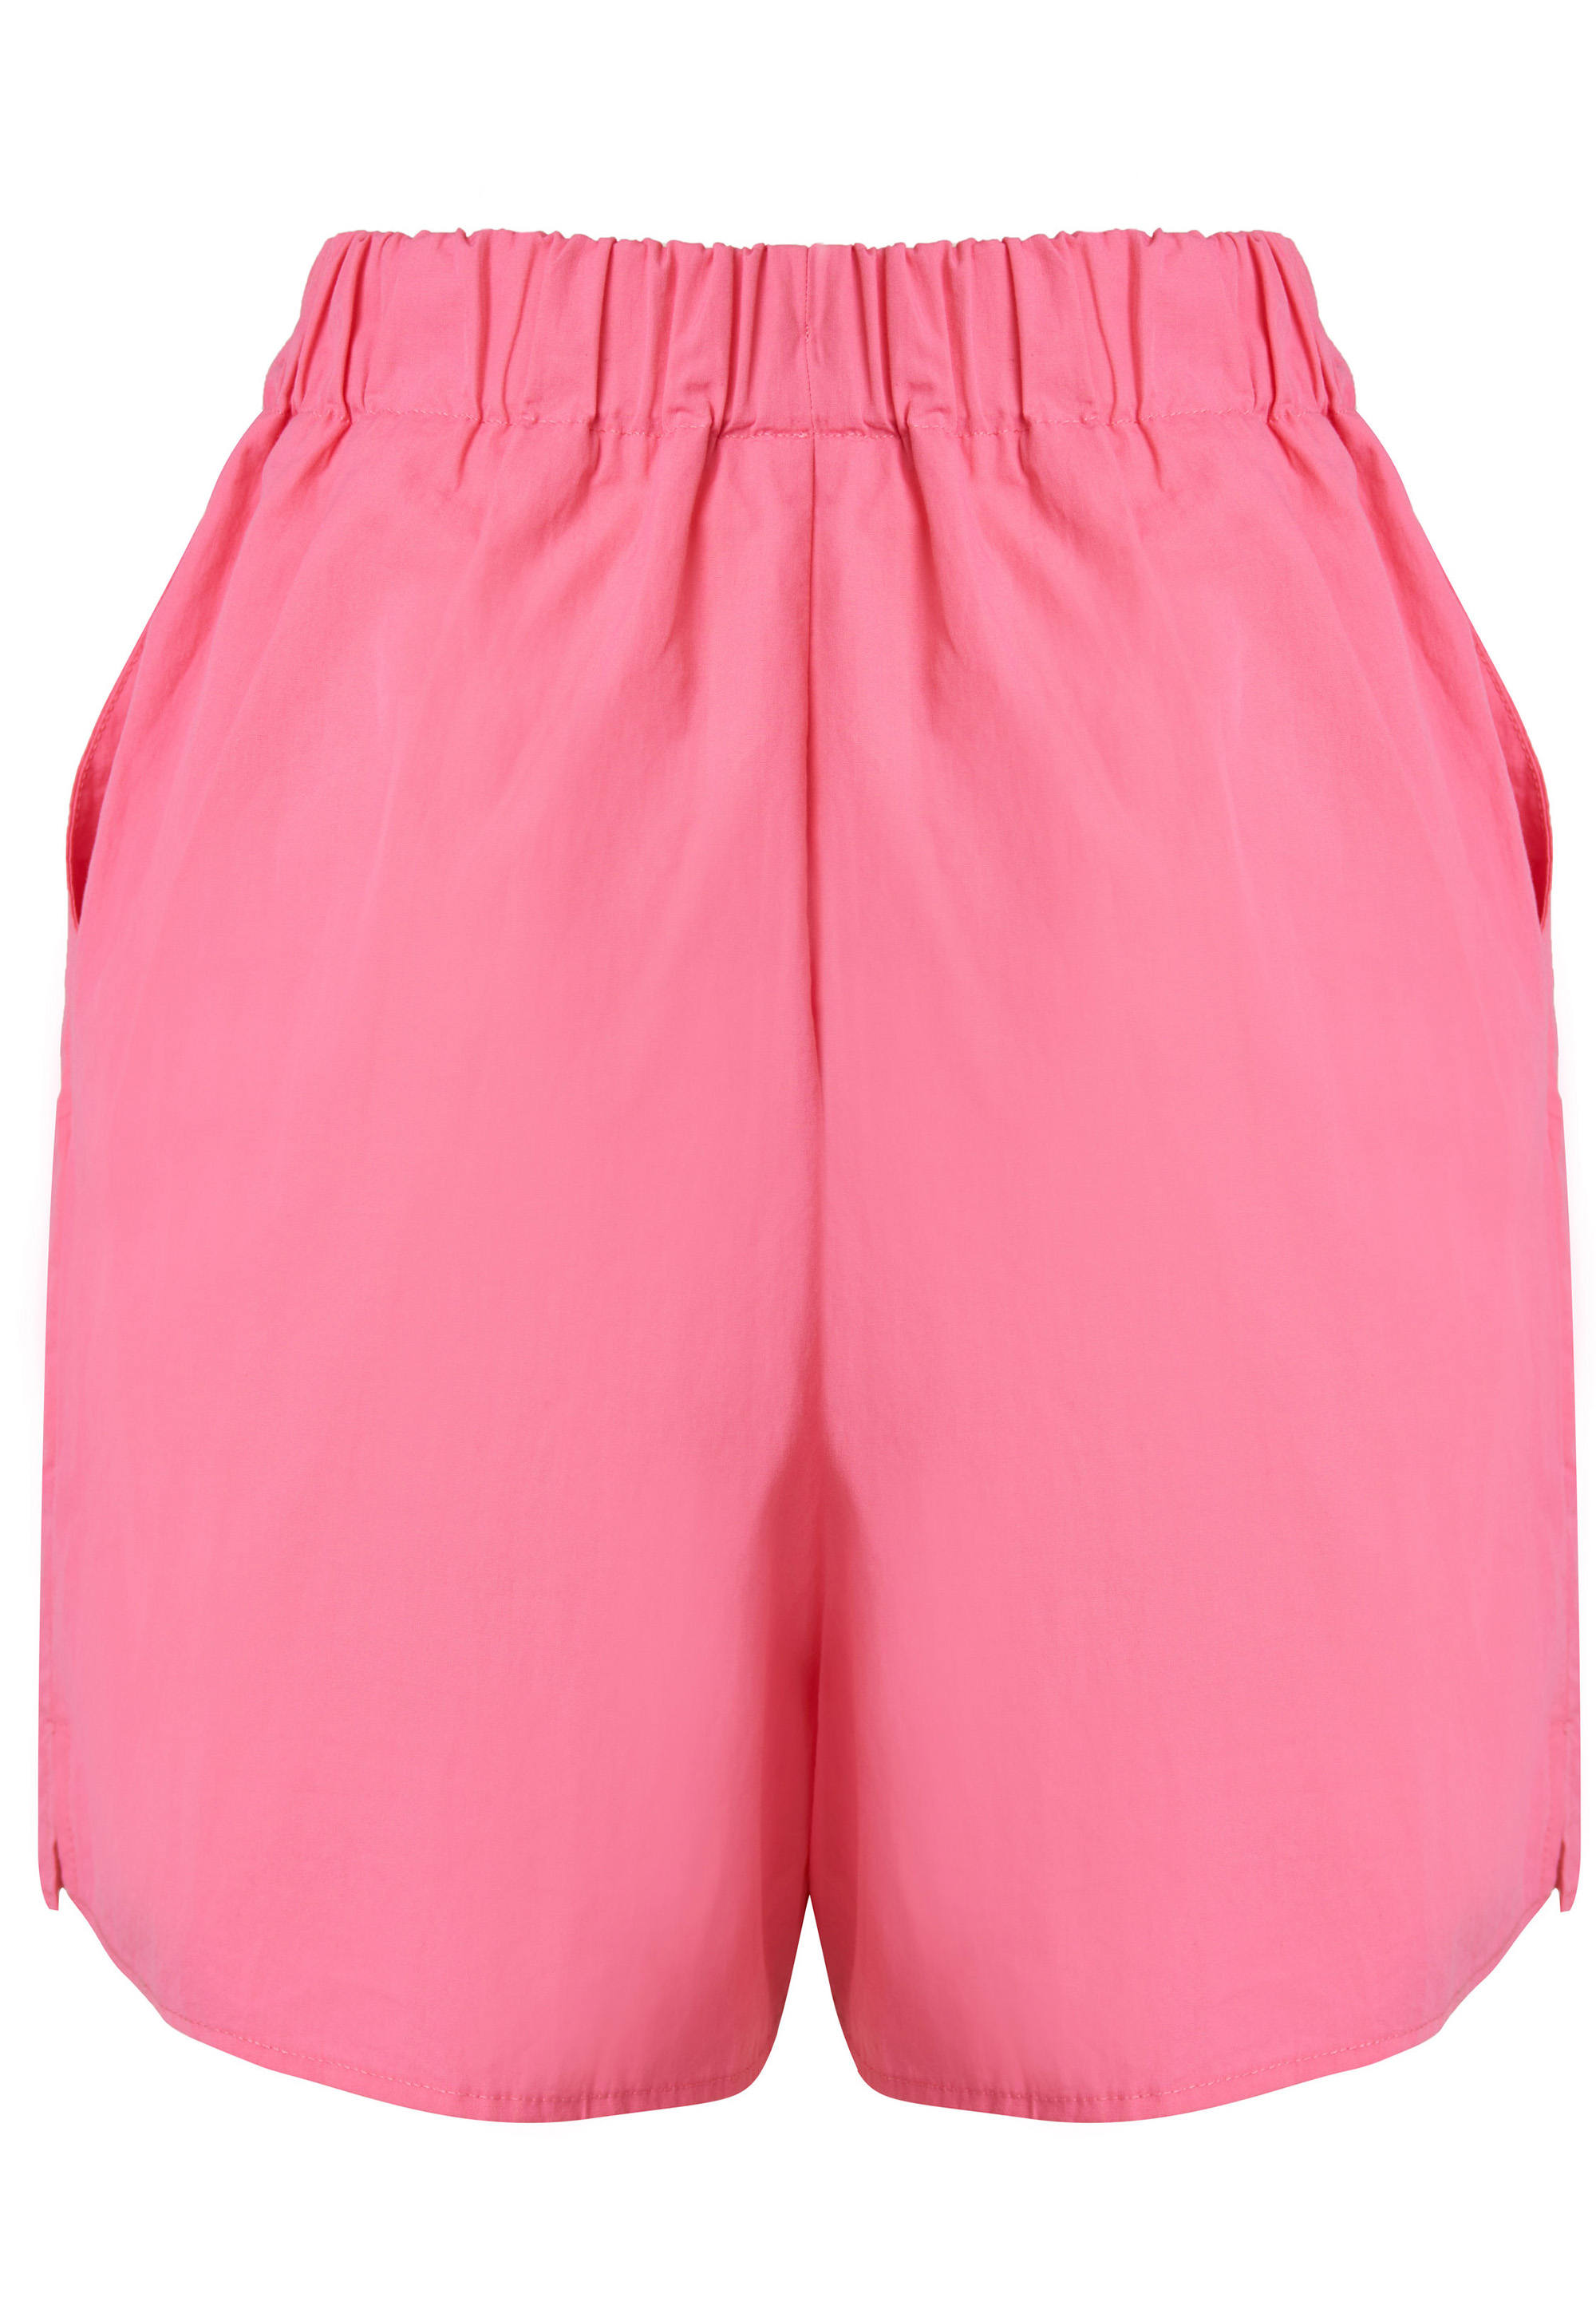 Cotton Candy Shorts ZAKI in Pink 